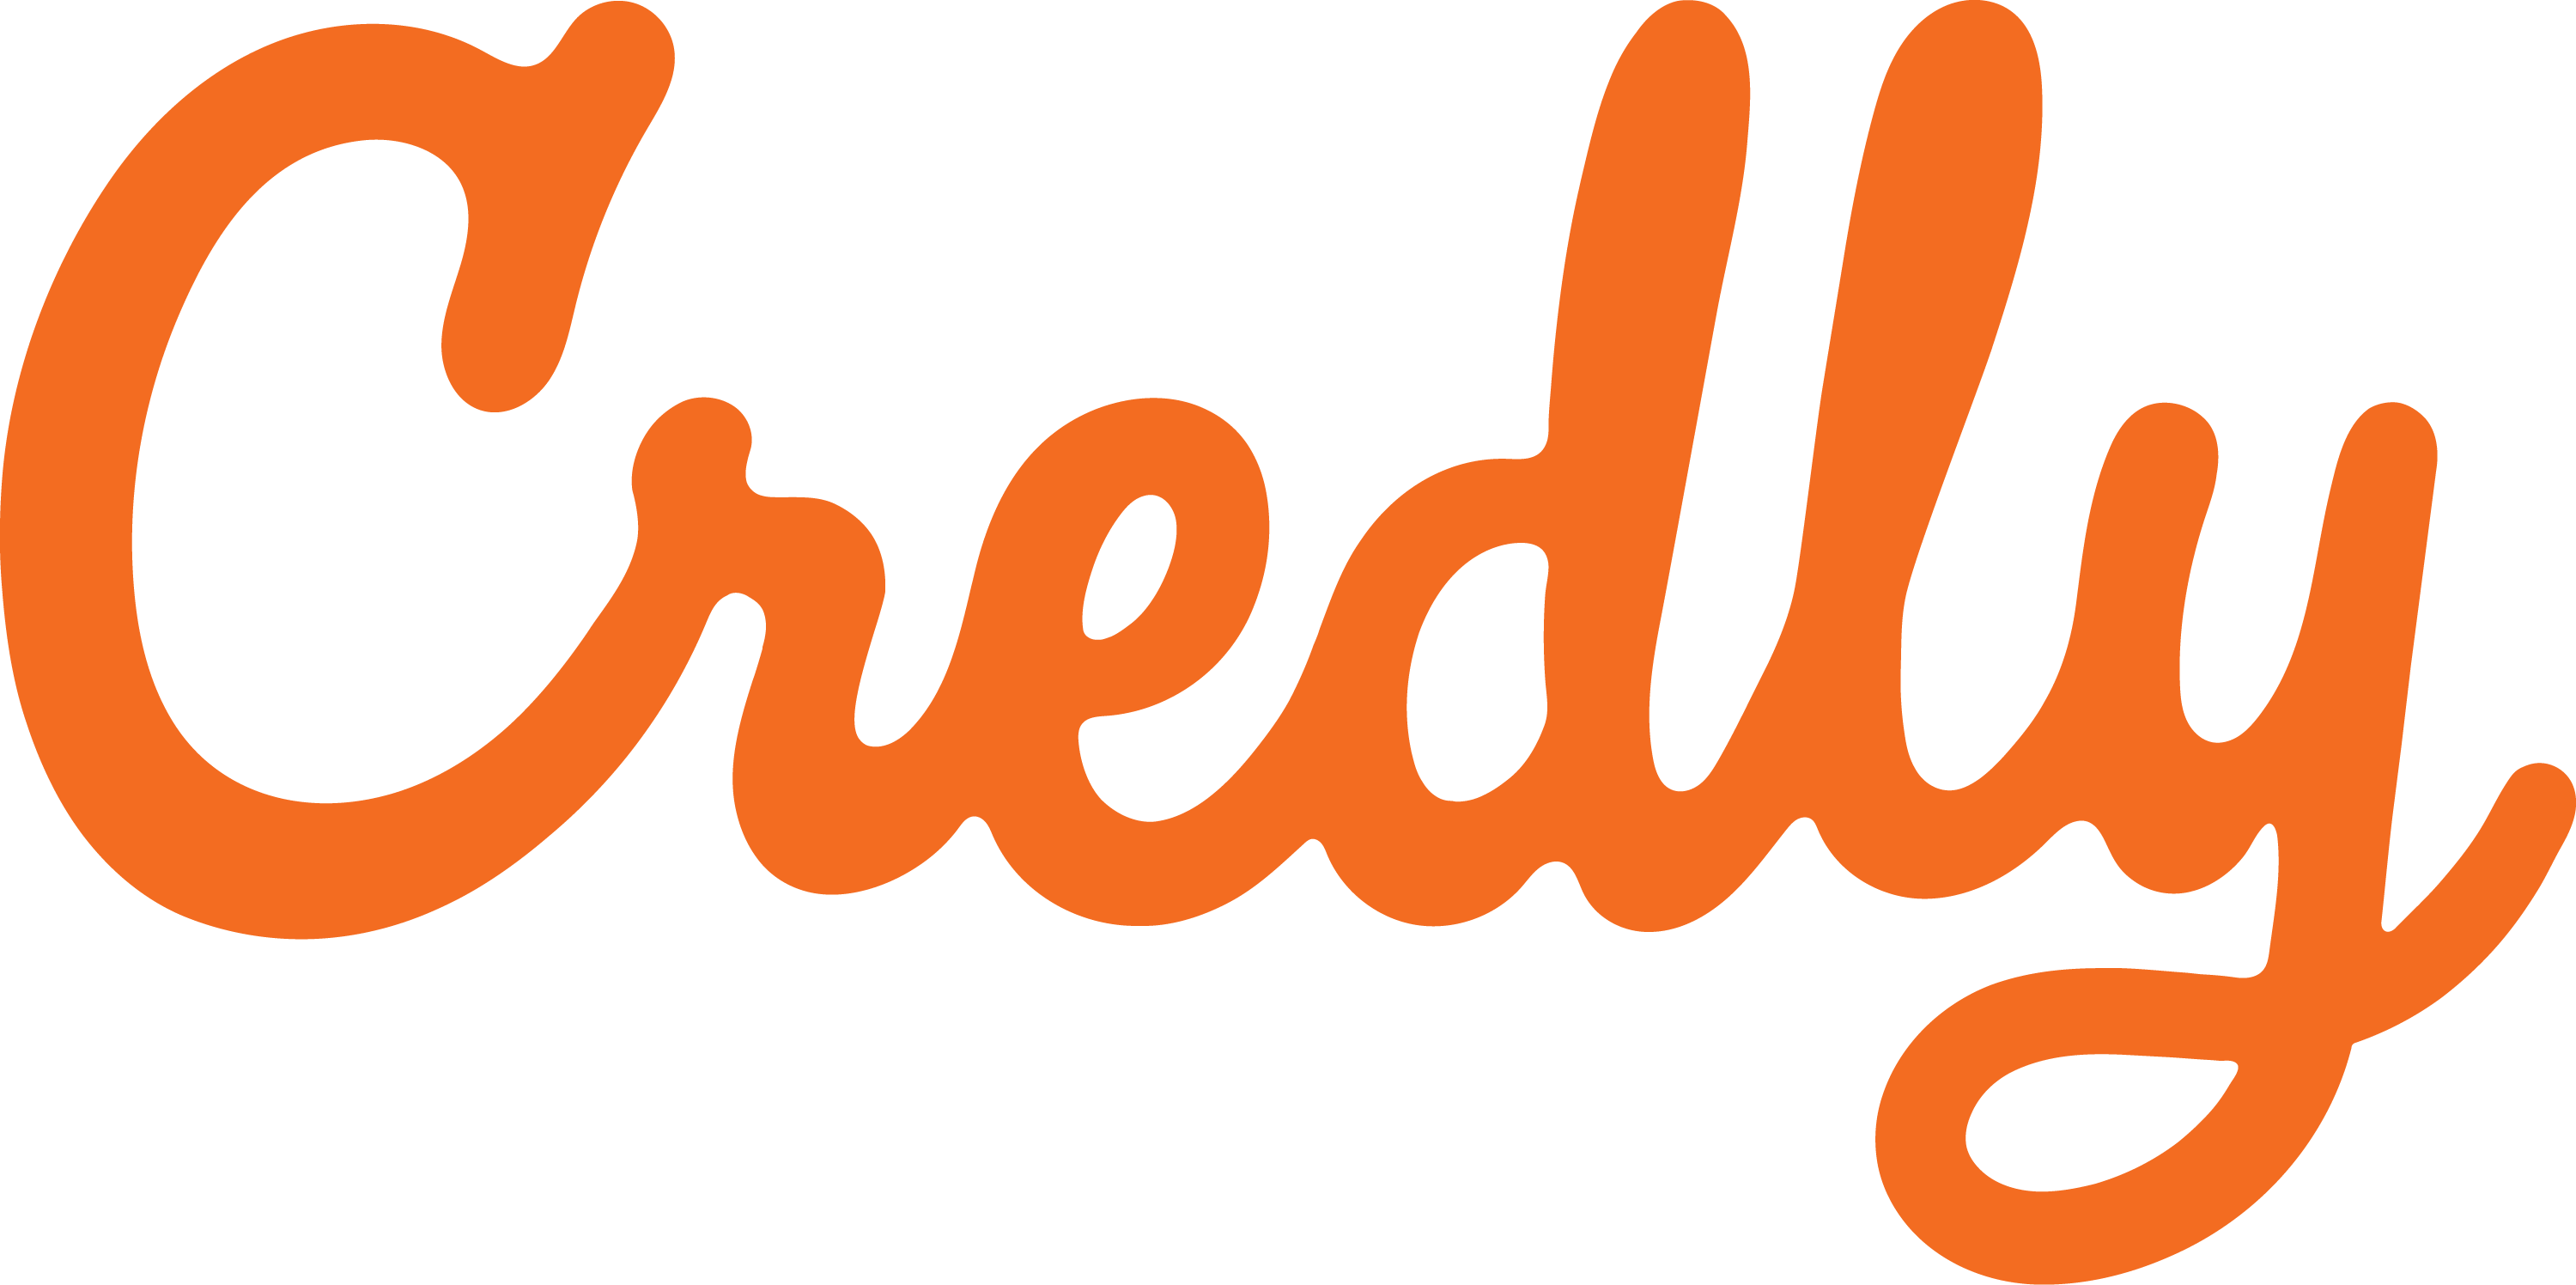 The Credly logo